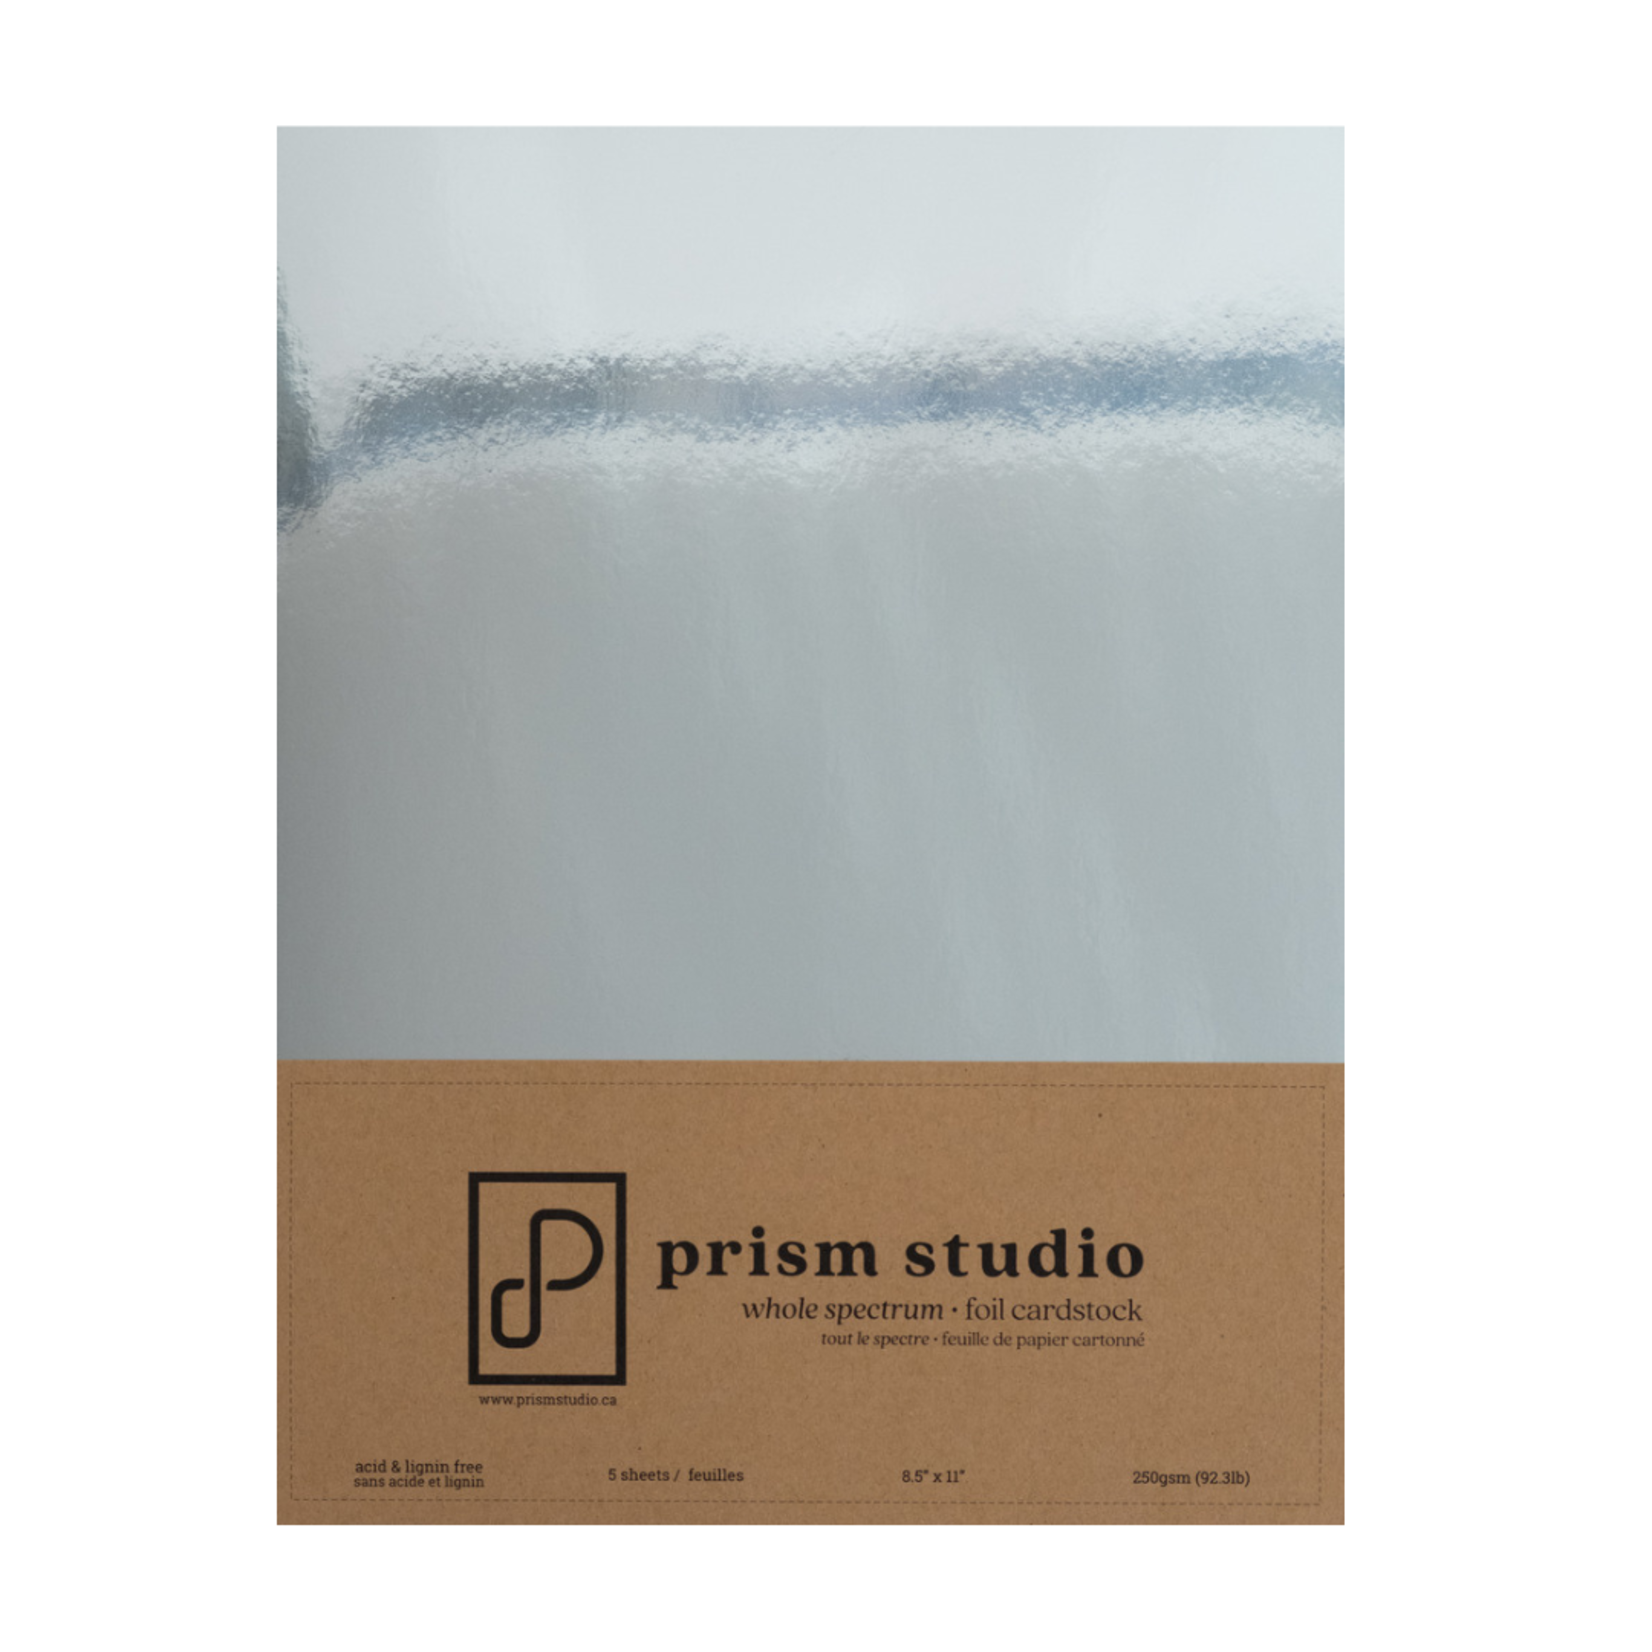 PRISM STUDIO PRISM STUDIO WHOLE SPECTRUM FOIL CARDSTOCK 8.5X11 CHROME